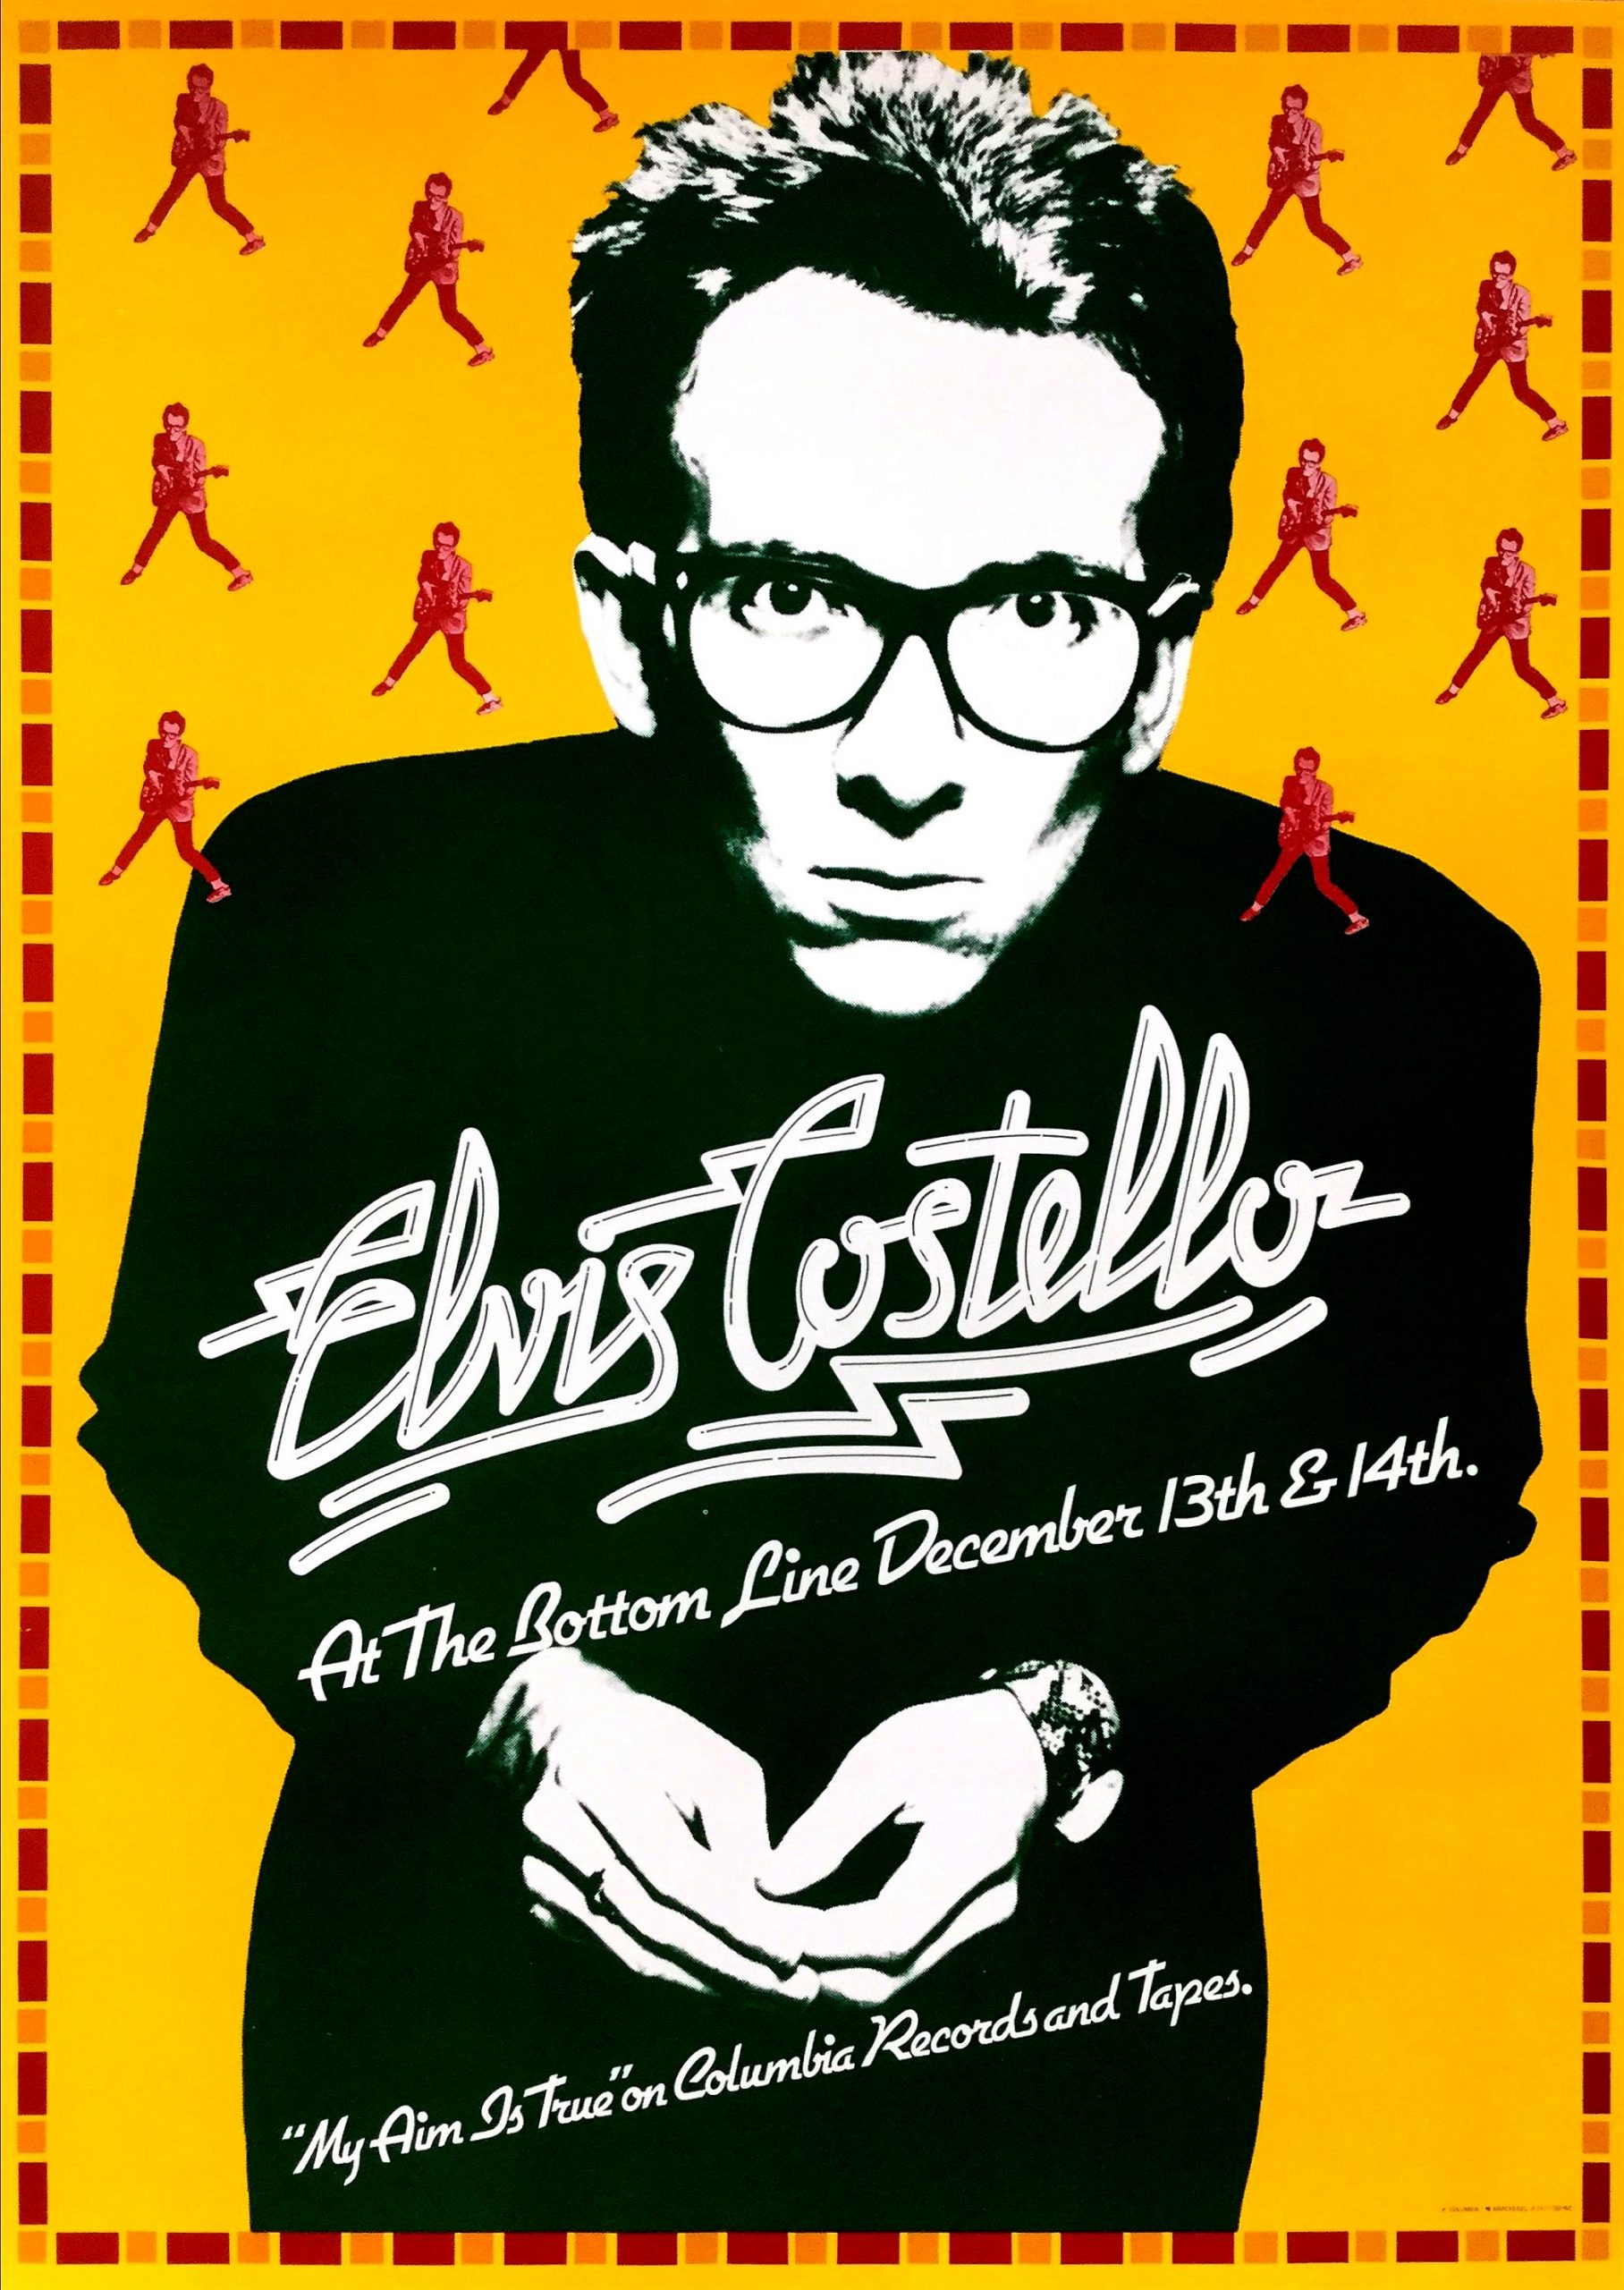 1977-elvis-costello-bottom-line